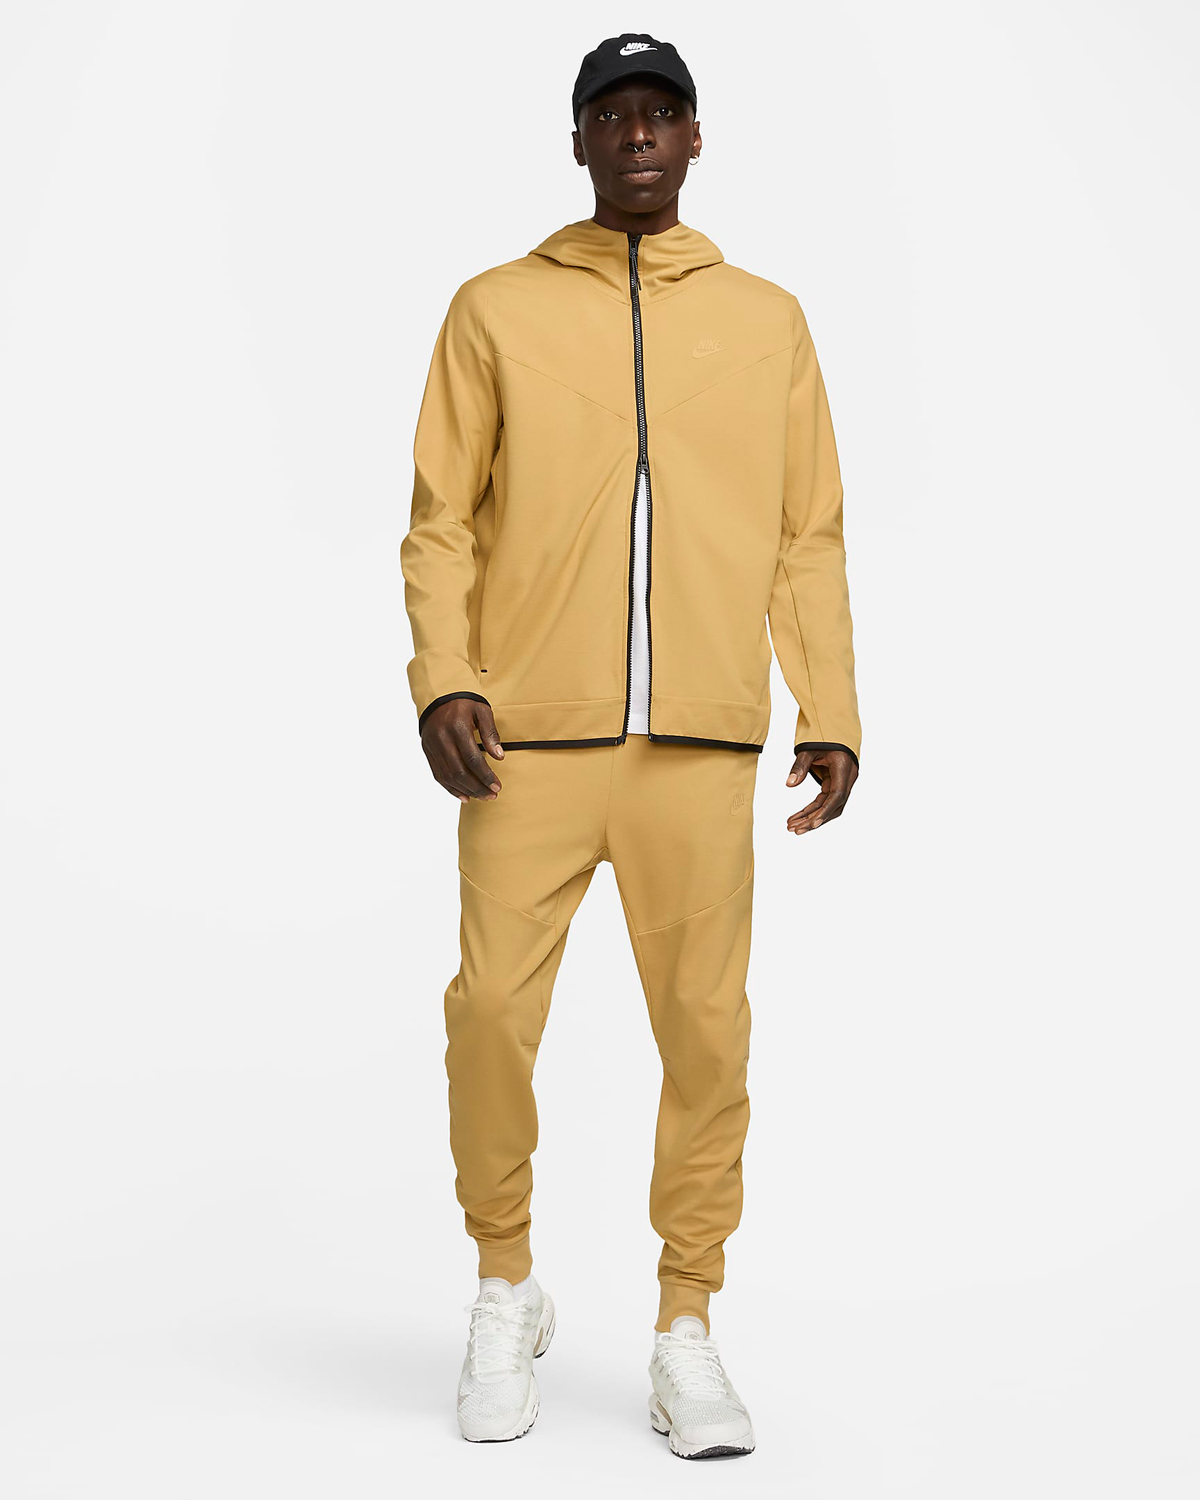 Nike-Tech-Fleece-Lightweight-Hooded-Jacket-Pants-Wheat-Gold